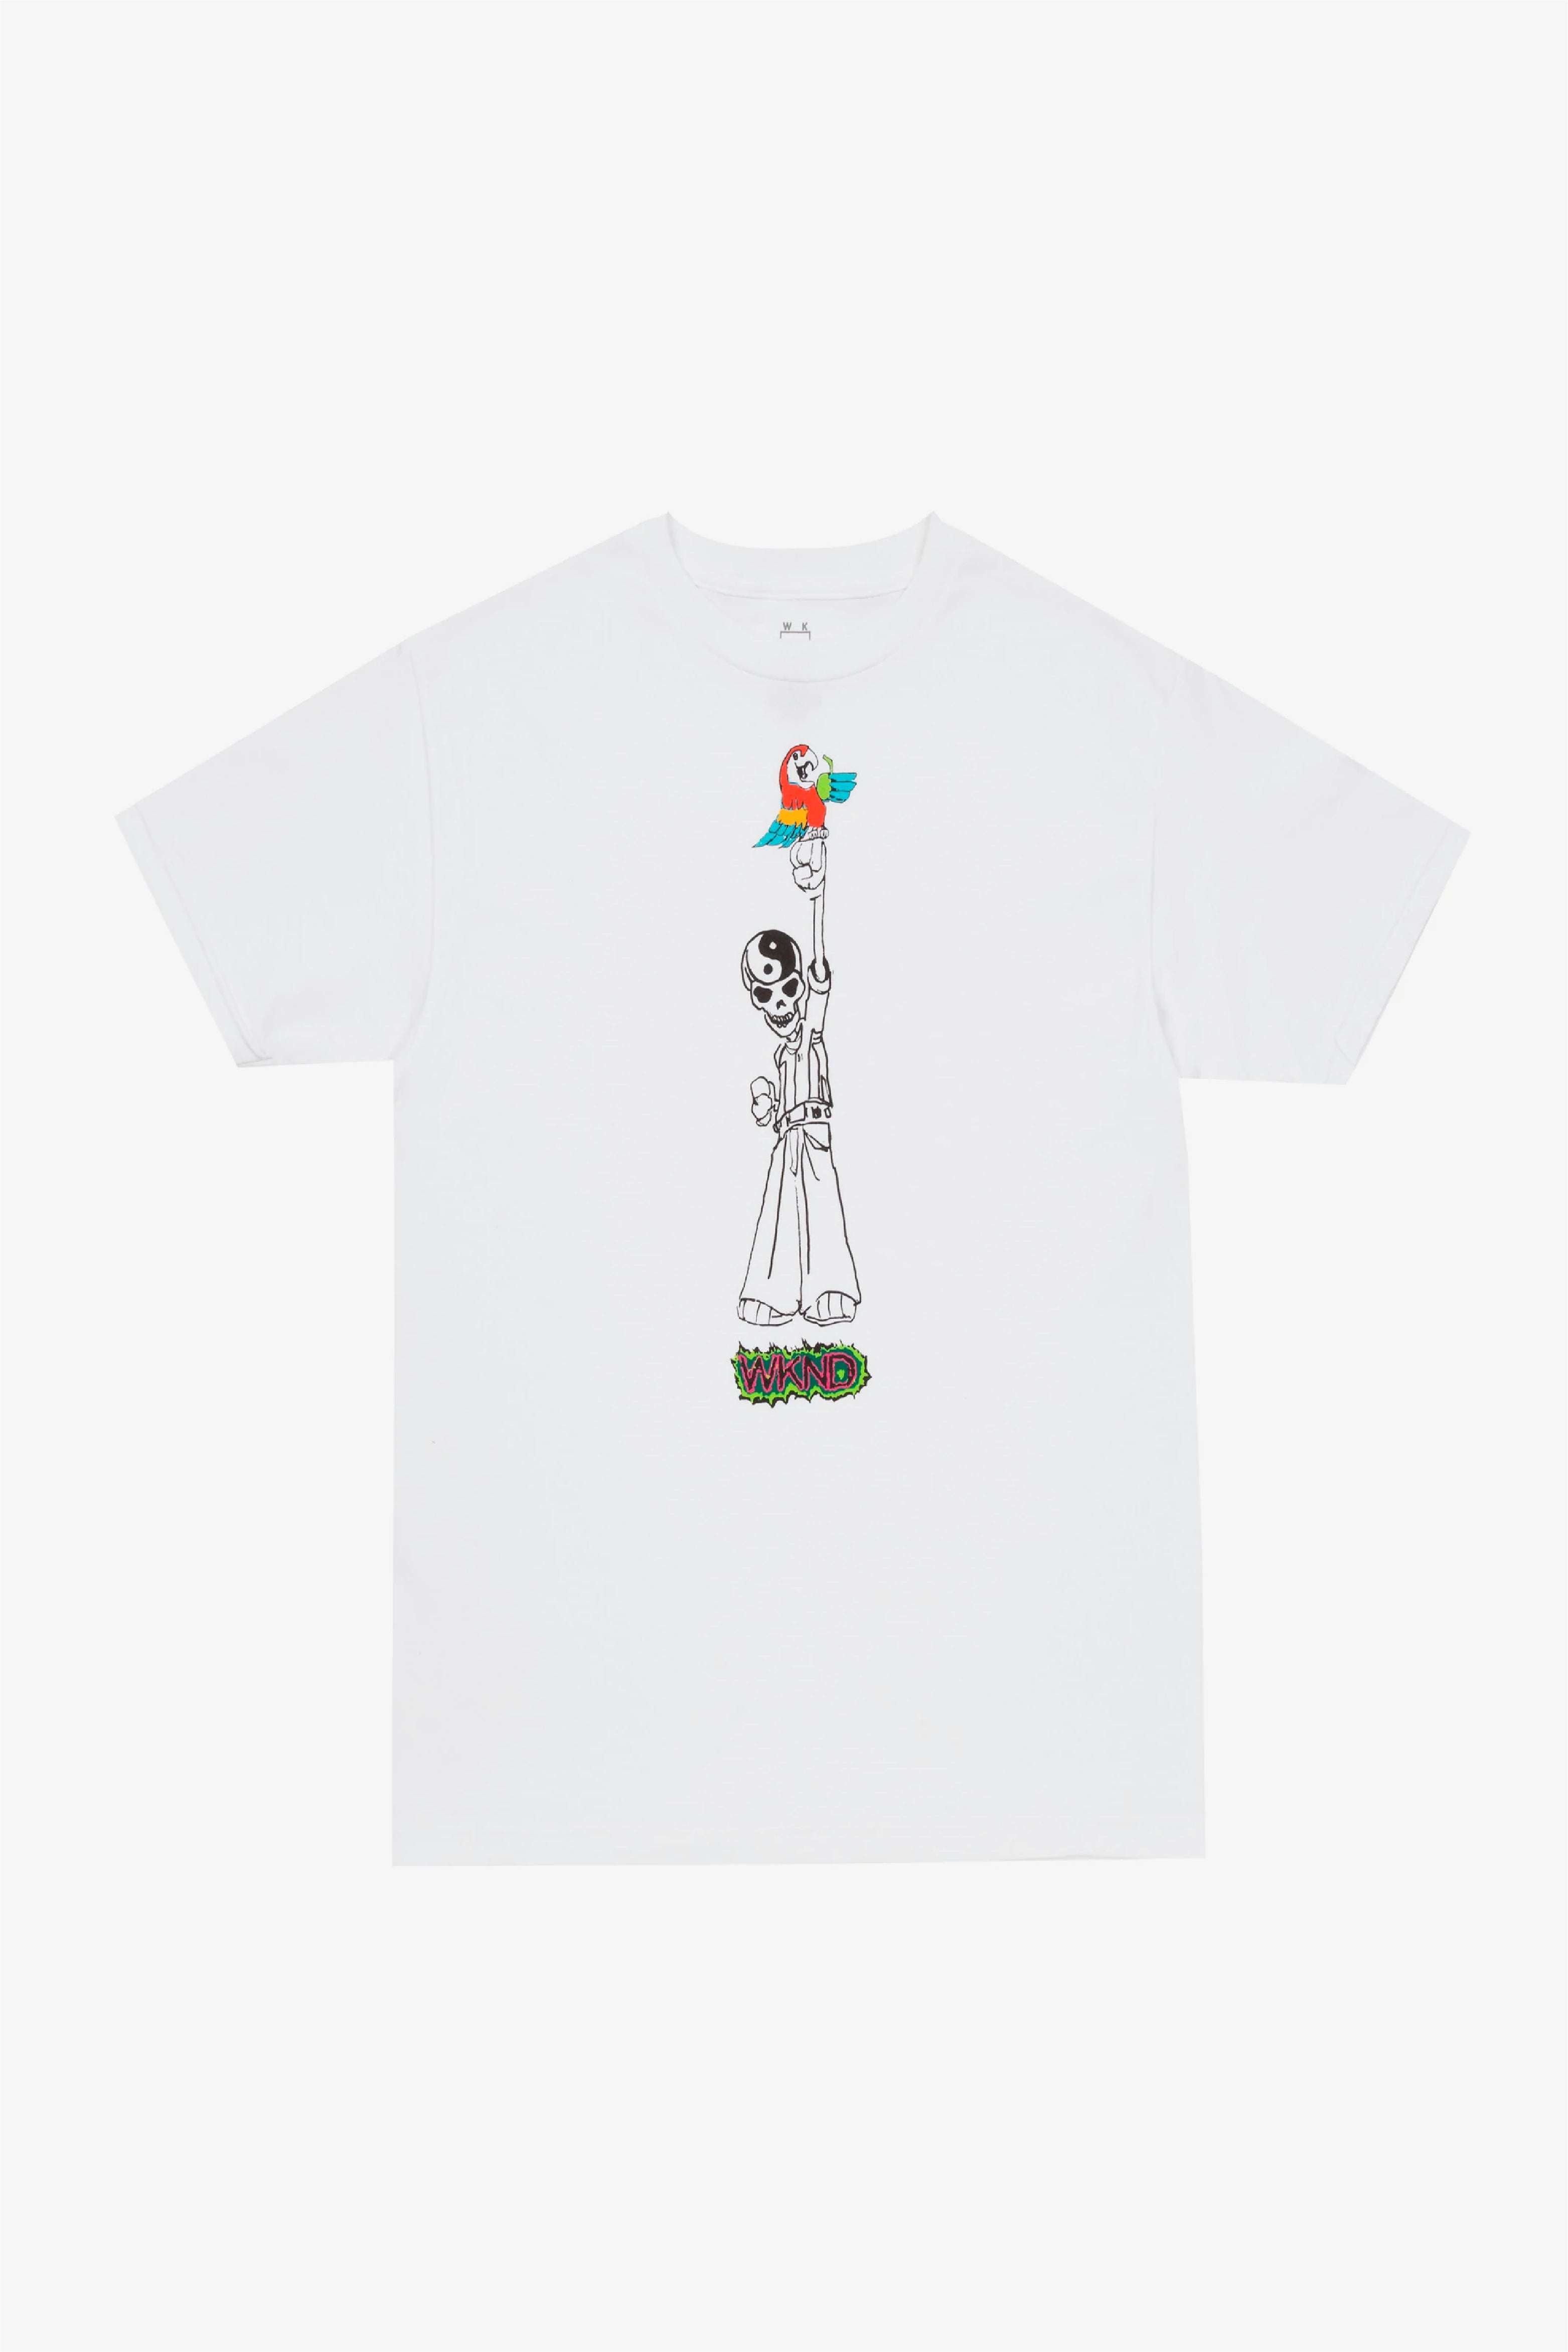 Selectshop FRAME - WKND Parrot Head Tee T-Shirts Dubai